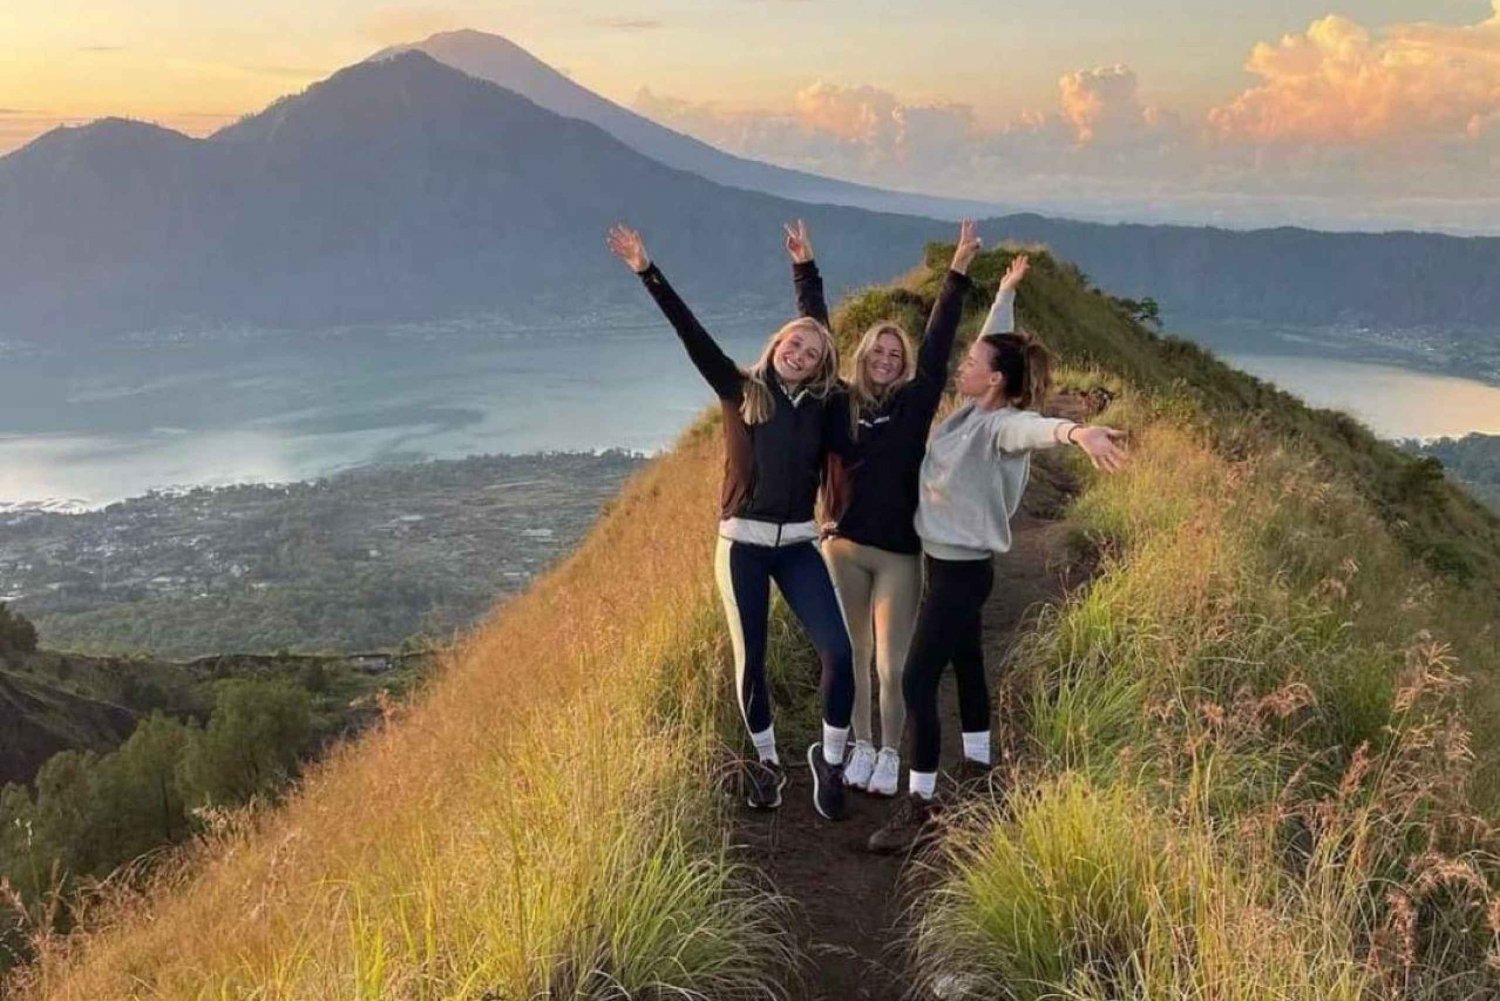 Bali: Mount Batur Sunrise Trek With Guide and Breakfast